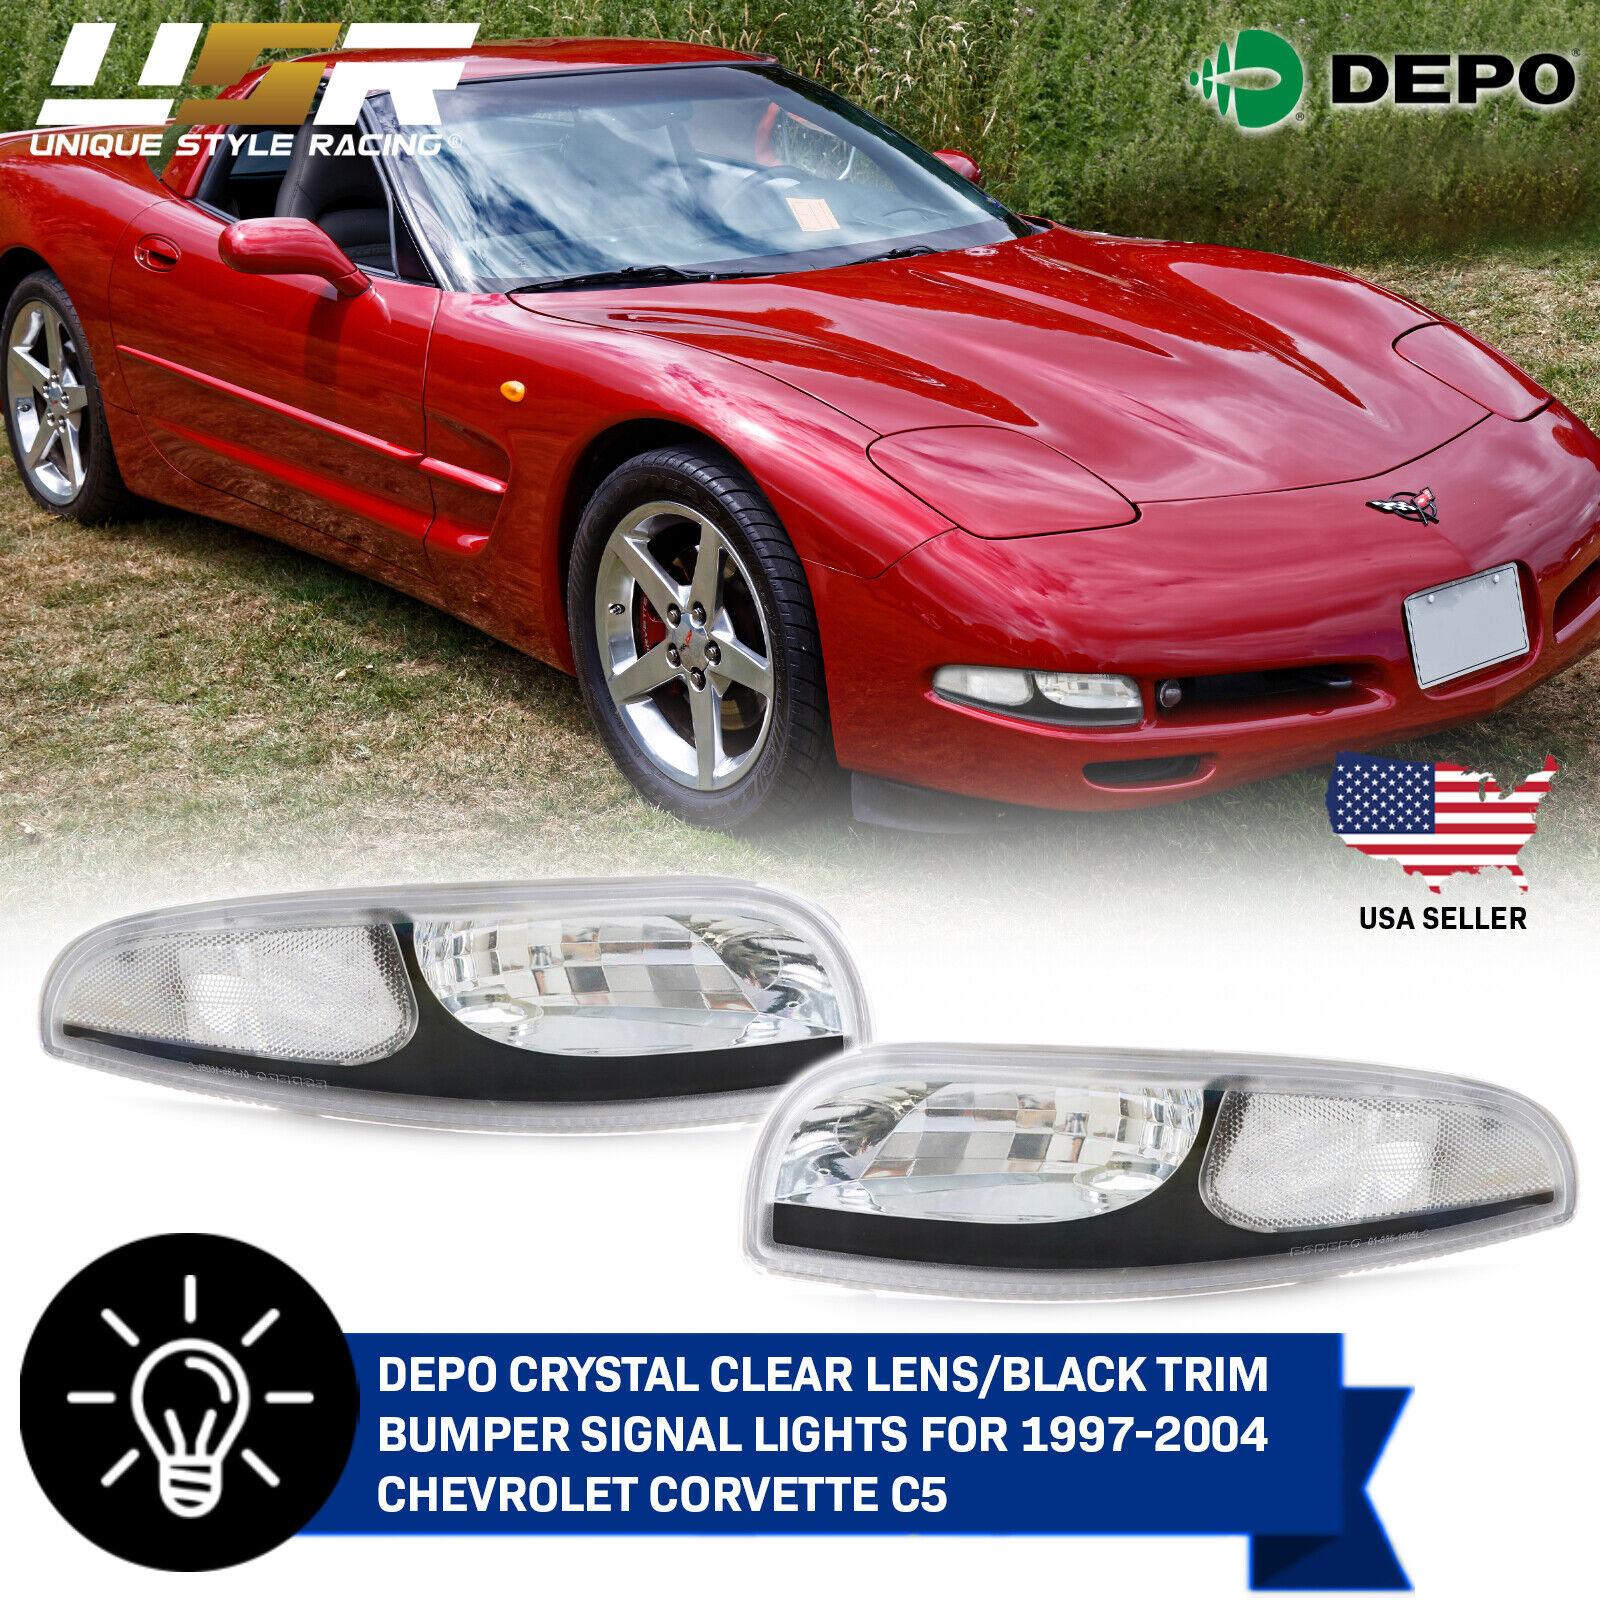 DEPO Black Clear Bumper Signal Lights For 1997-2004 Chevy Chevrolet Corvette C5